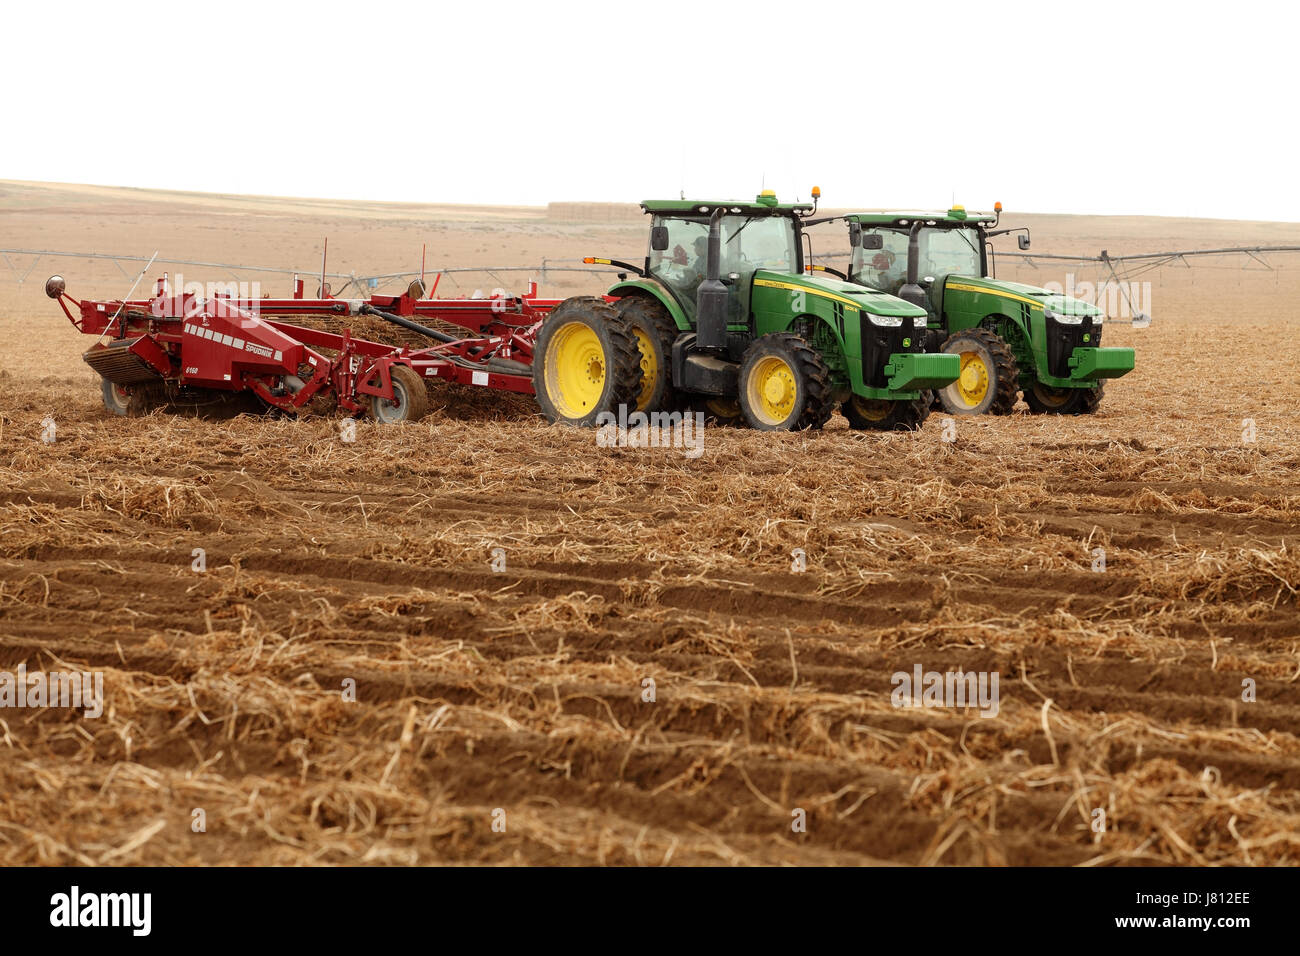 Mechanized harvesting of potatoes in the fertile farm fields of Idaho. Stock Photo